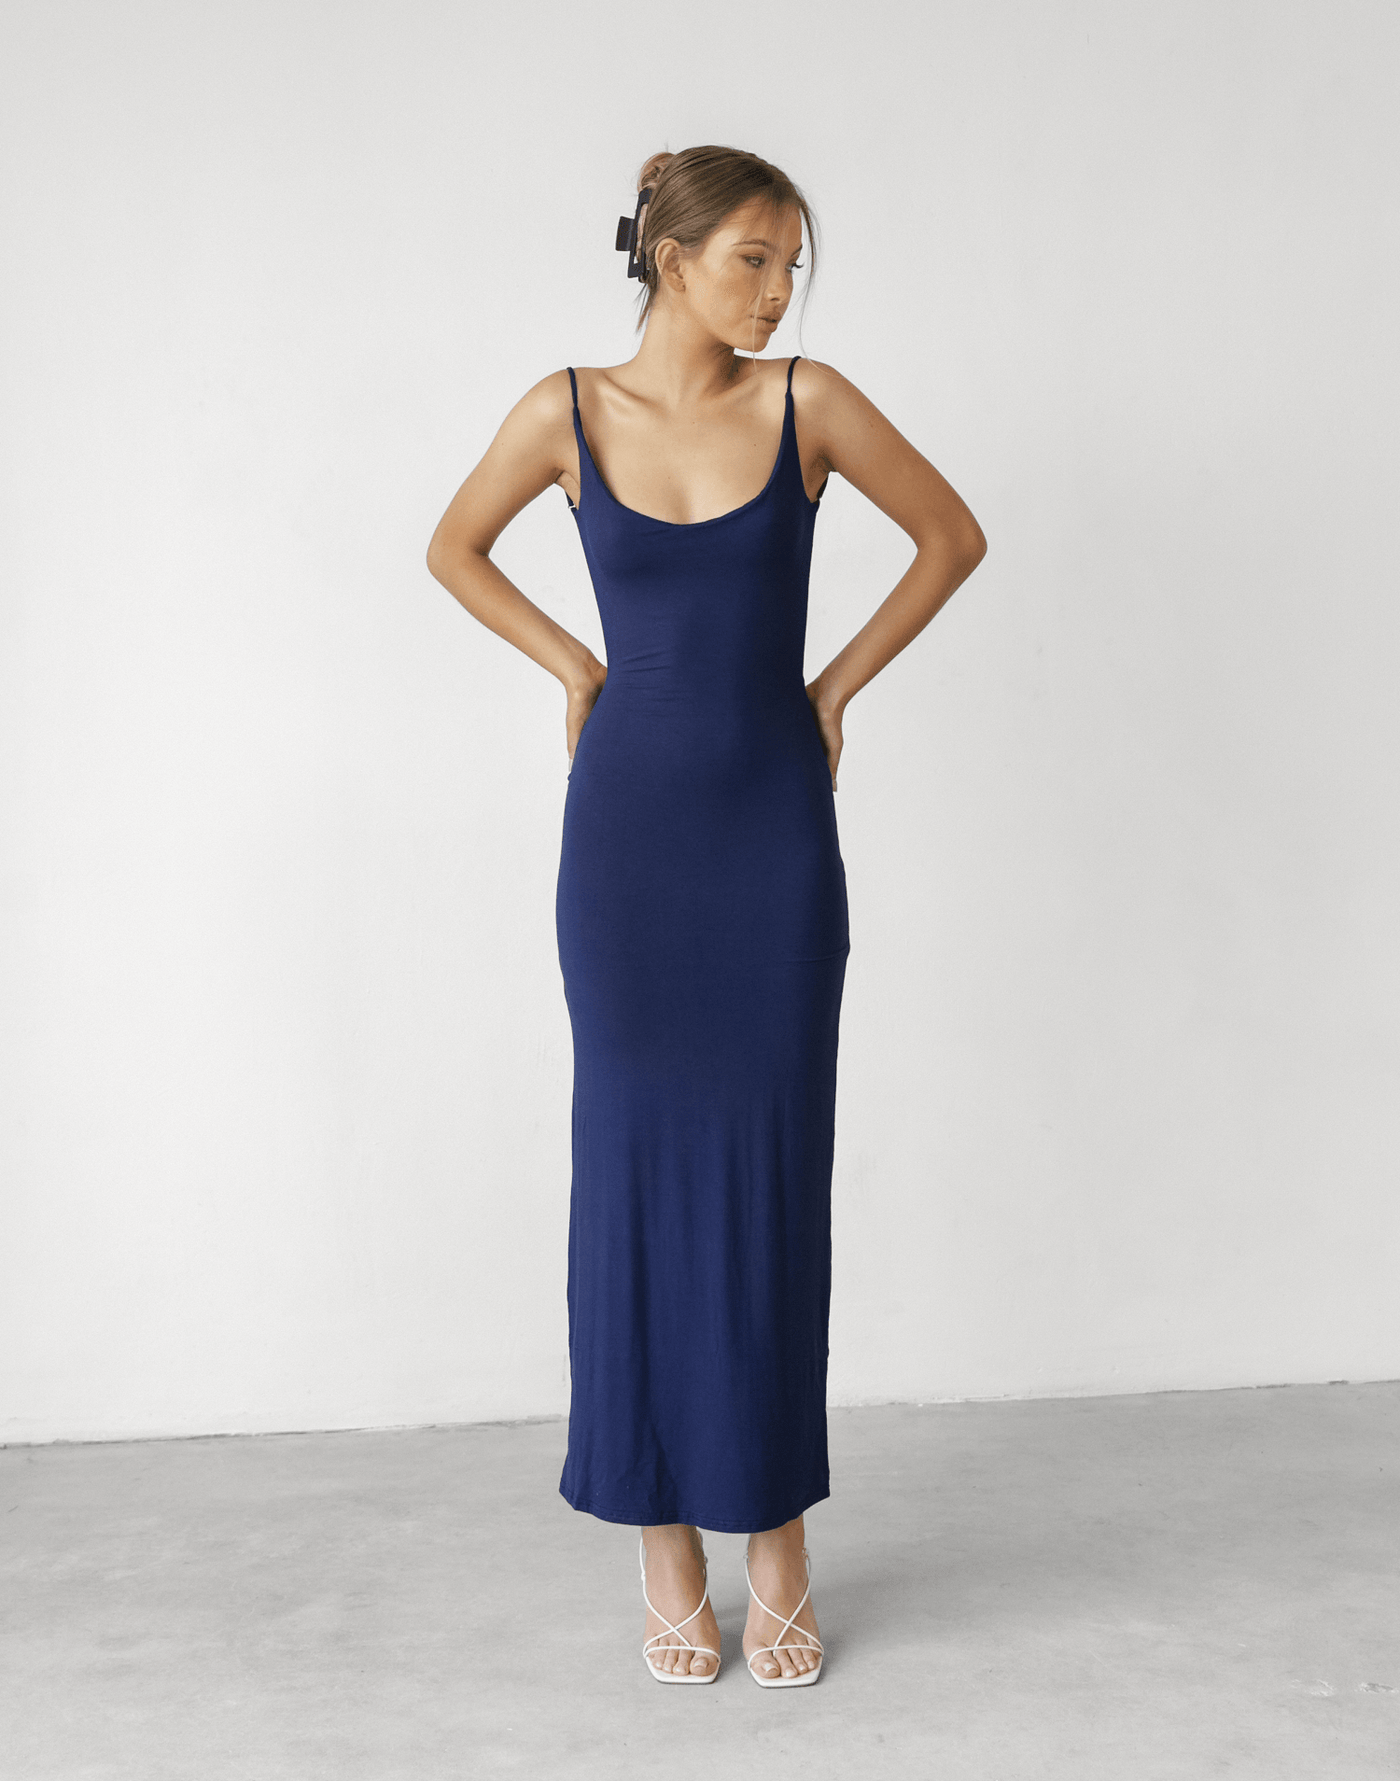 Ellidy Maxi Dress (Navy) -Navy Backless Maxi Dress - Women's Dress - Charcoal Clothing